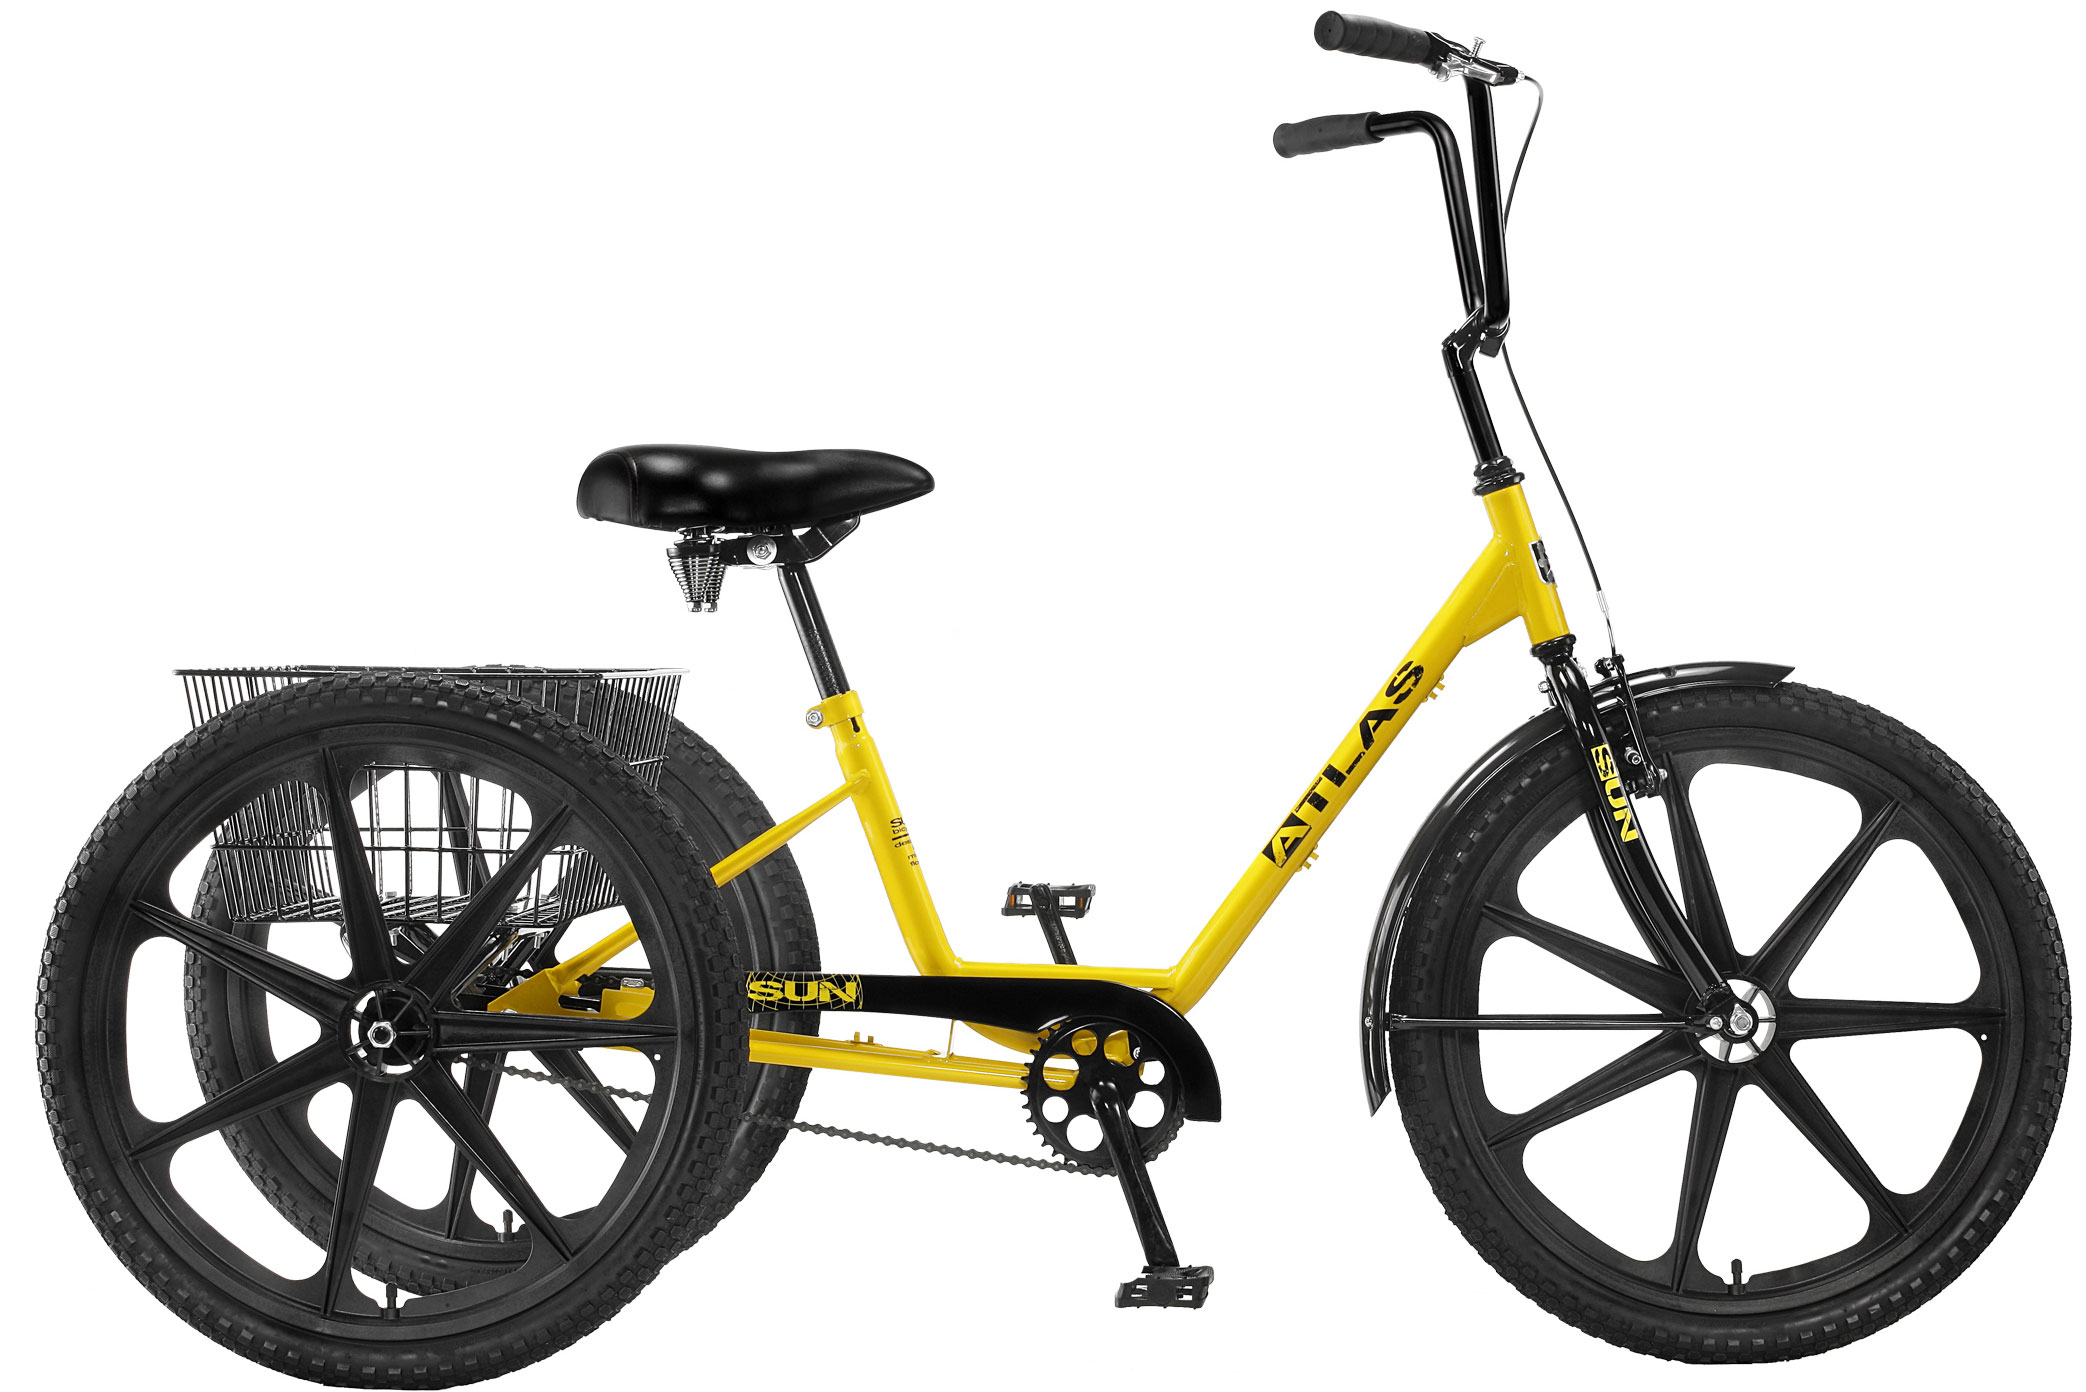 Sun Bicycles Atlas Deluxe Trike (3 Speed) Walt's Cycle Sunnyvale CA